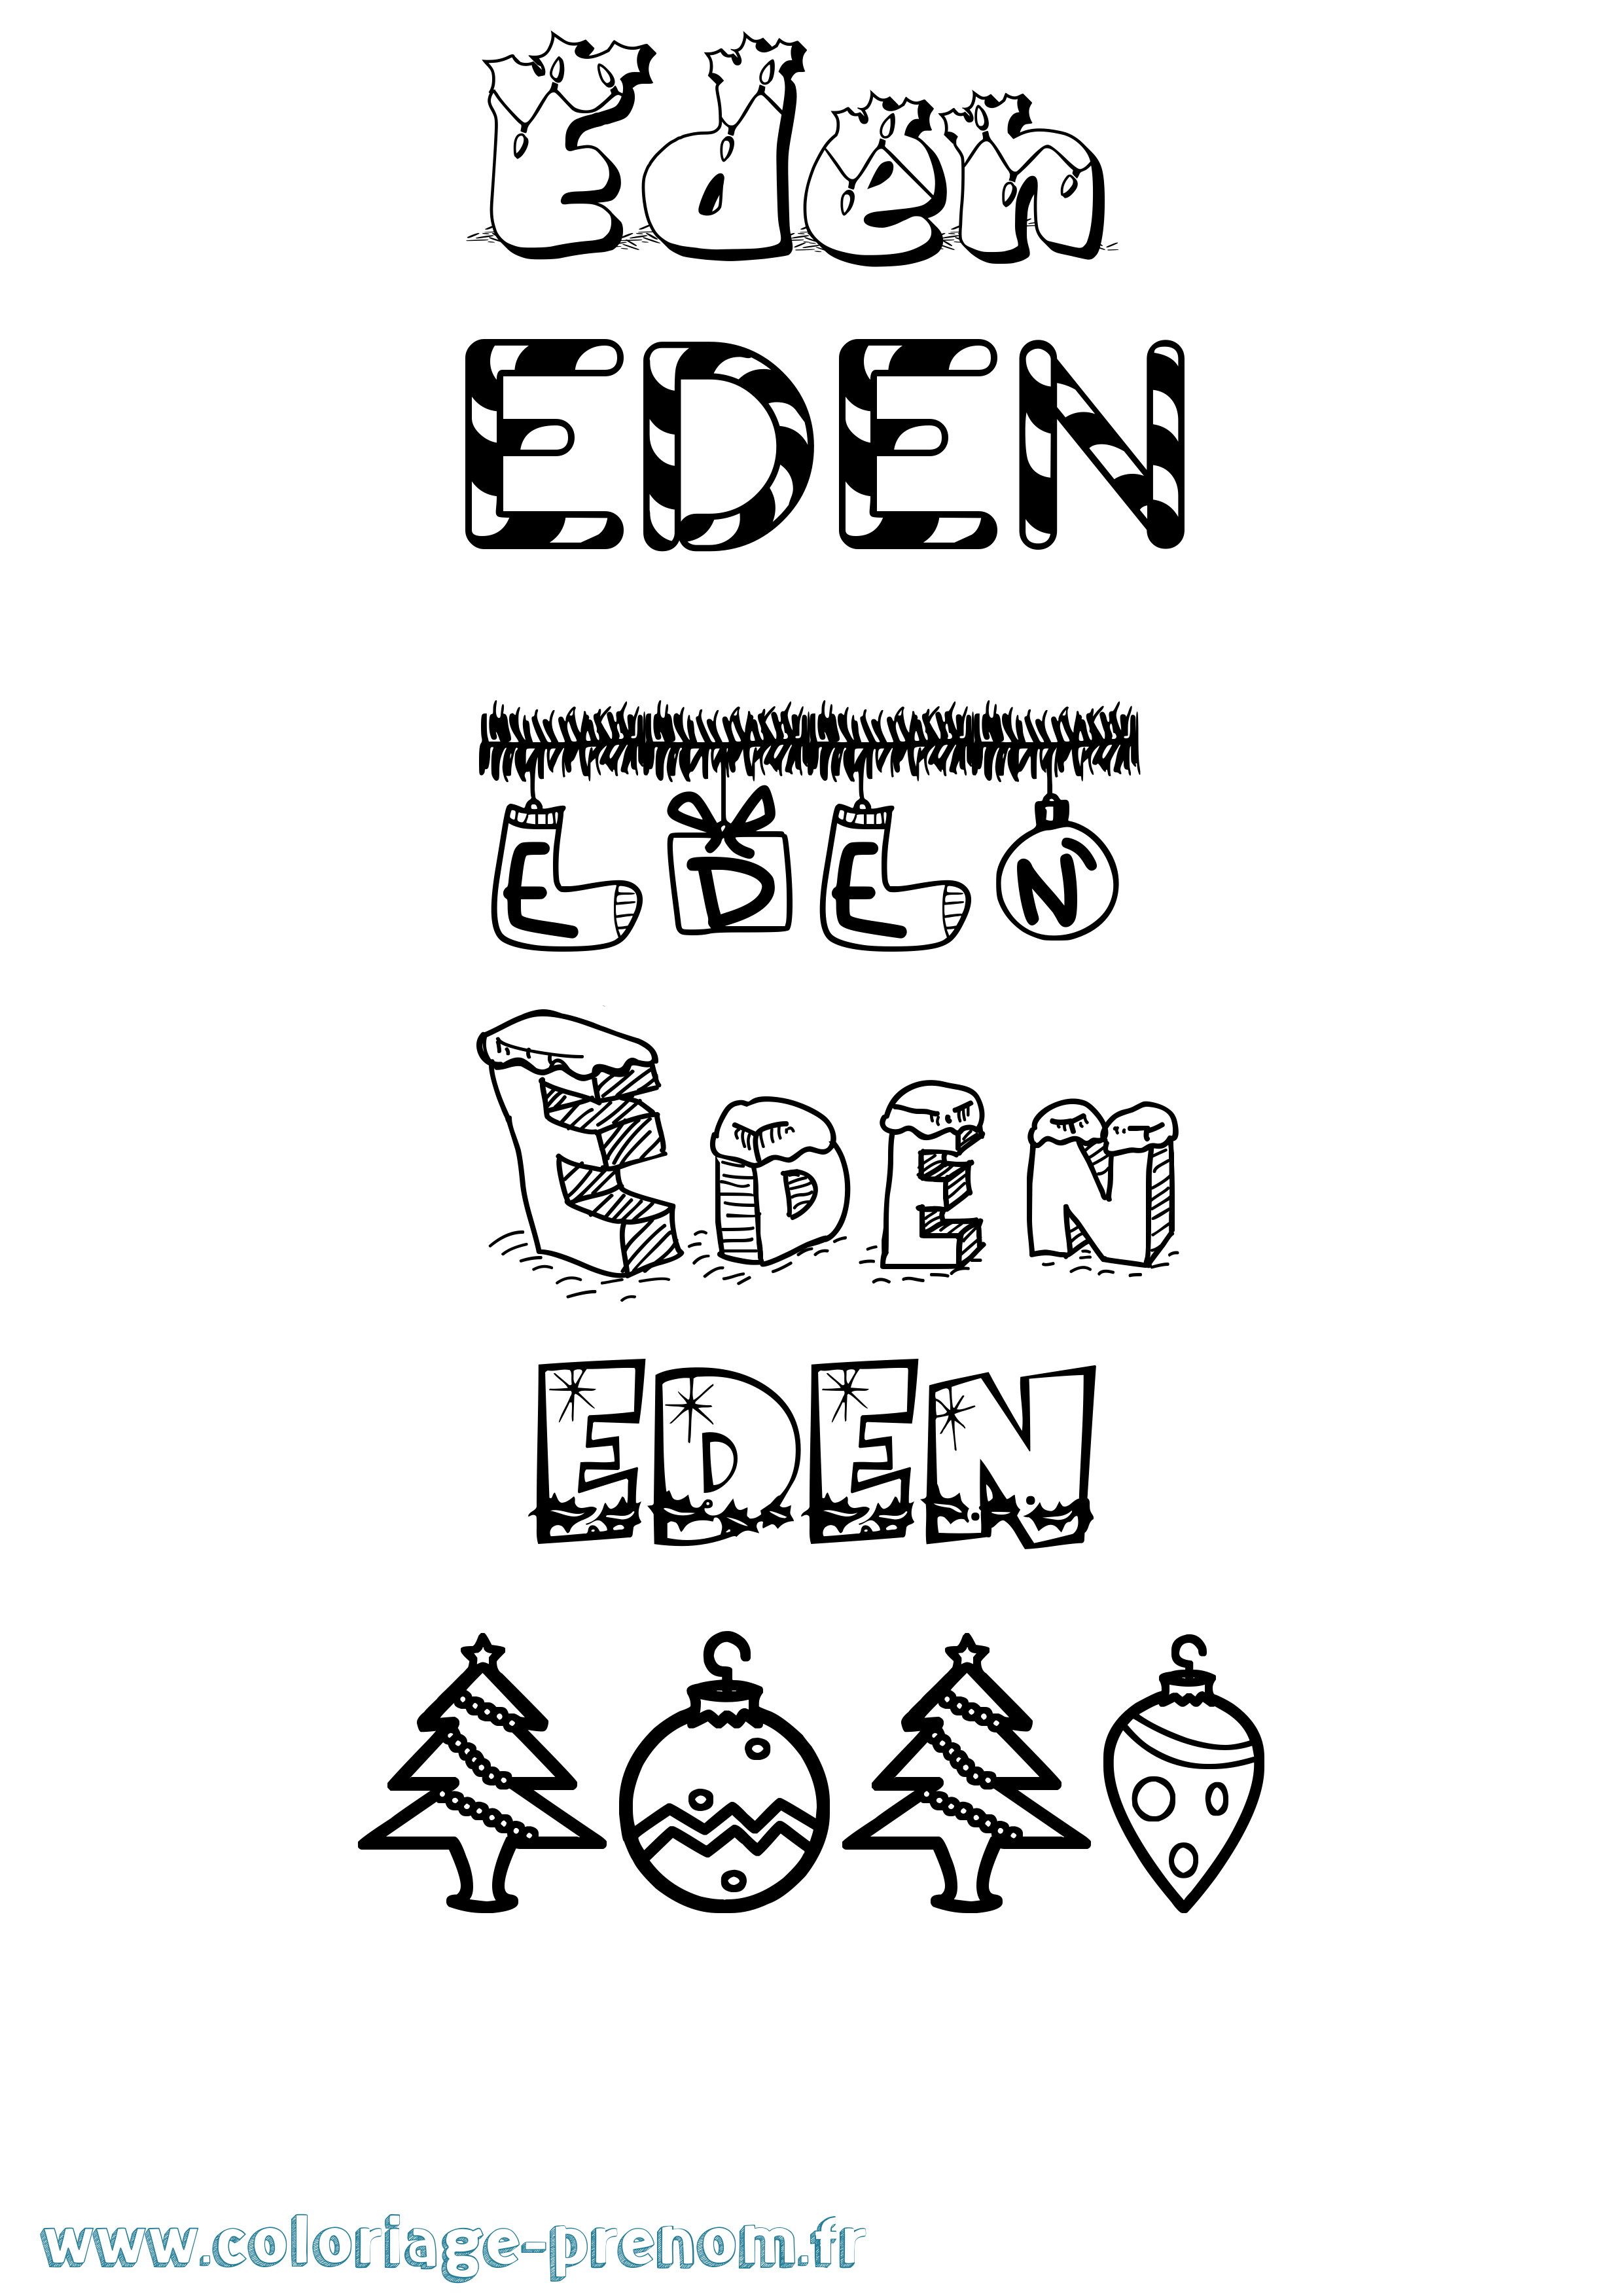 Coloriage prénom Eden